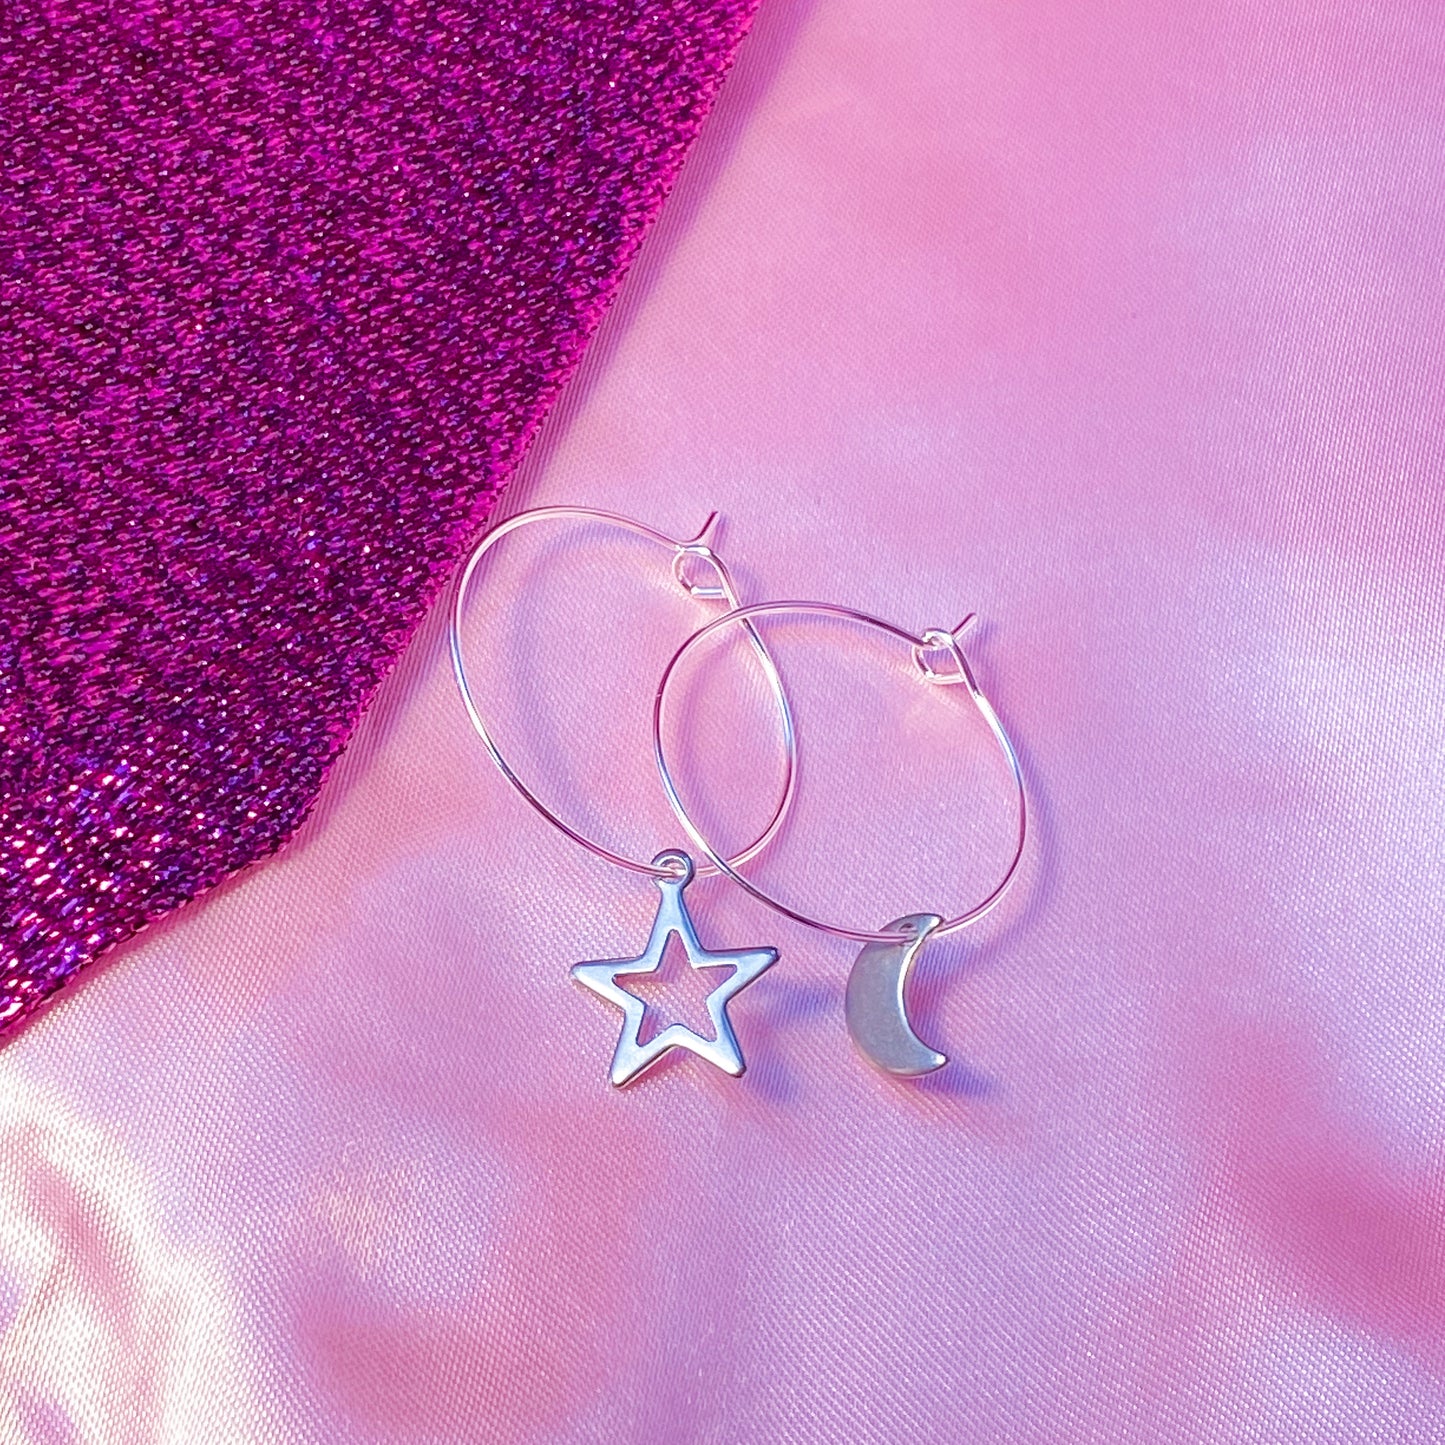 Silver star and moon charm hoop earrings, minimalist celestial earrings